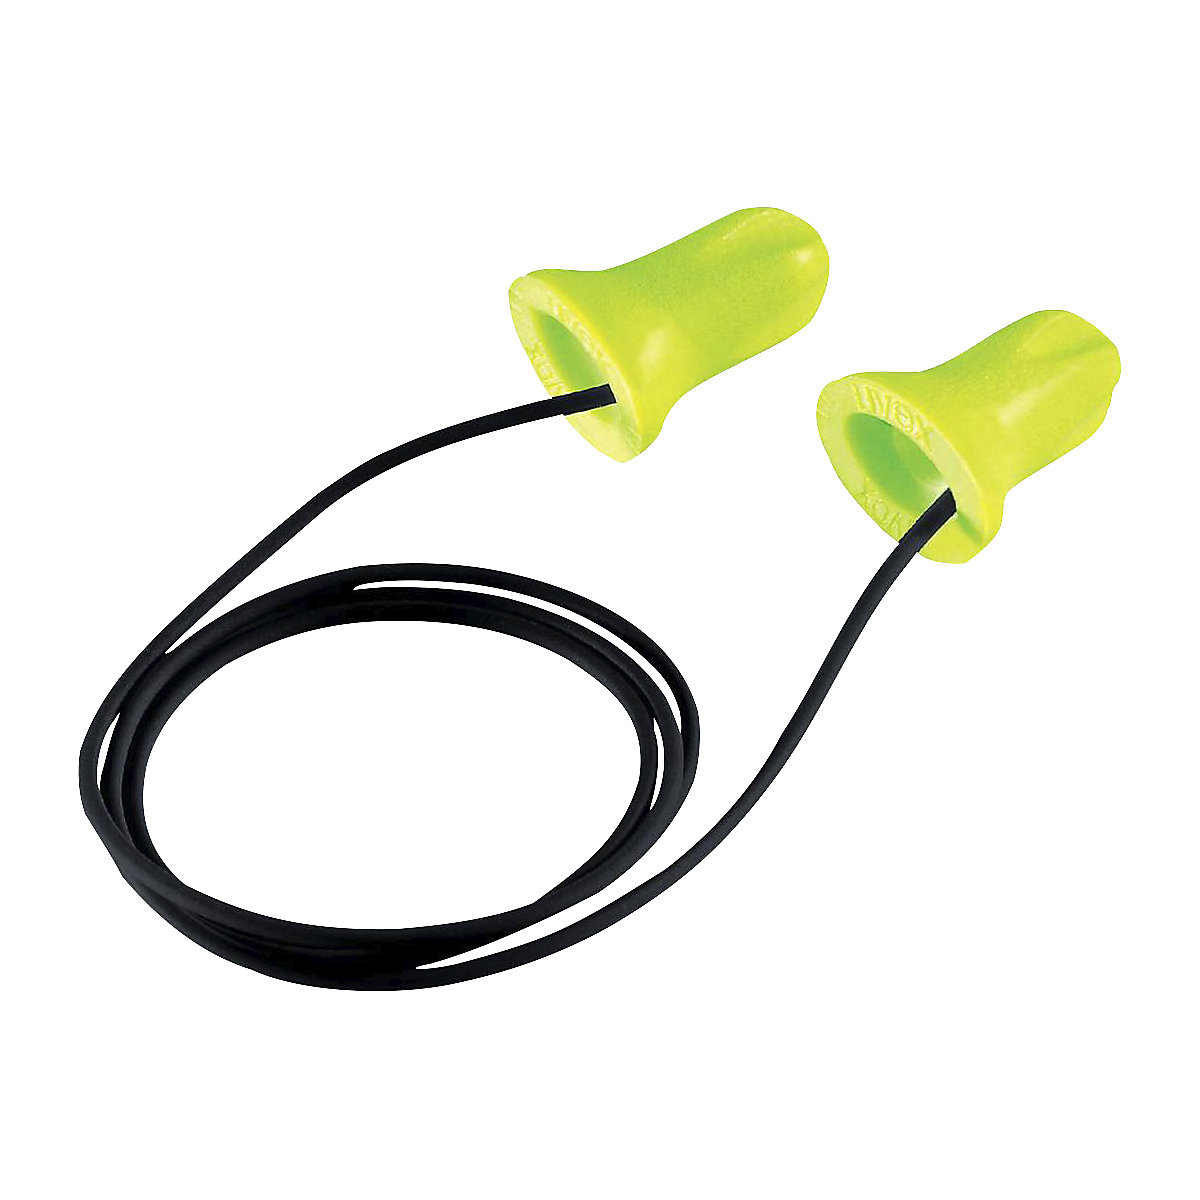 hi-com 2112101 earplug with cord - Uvex